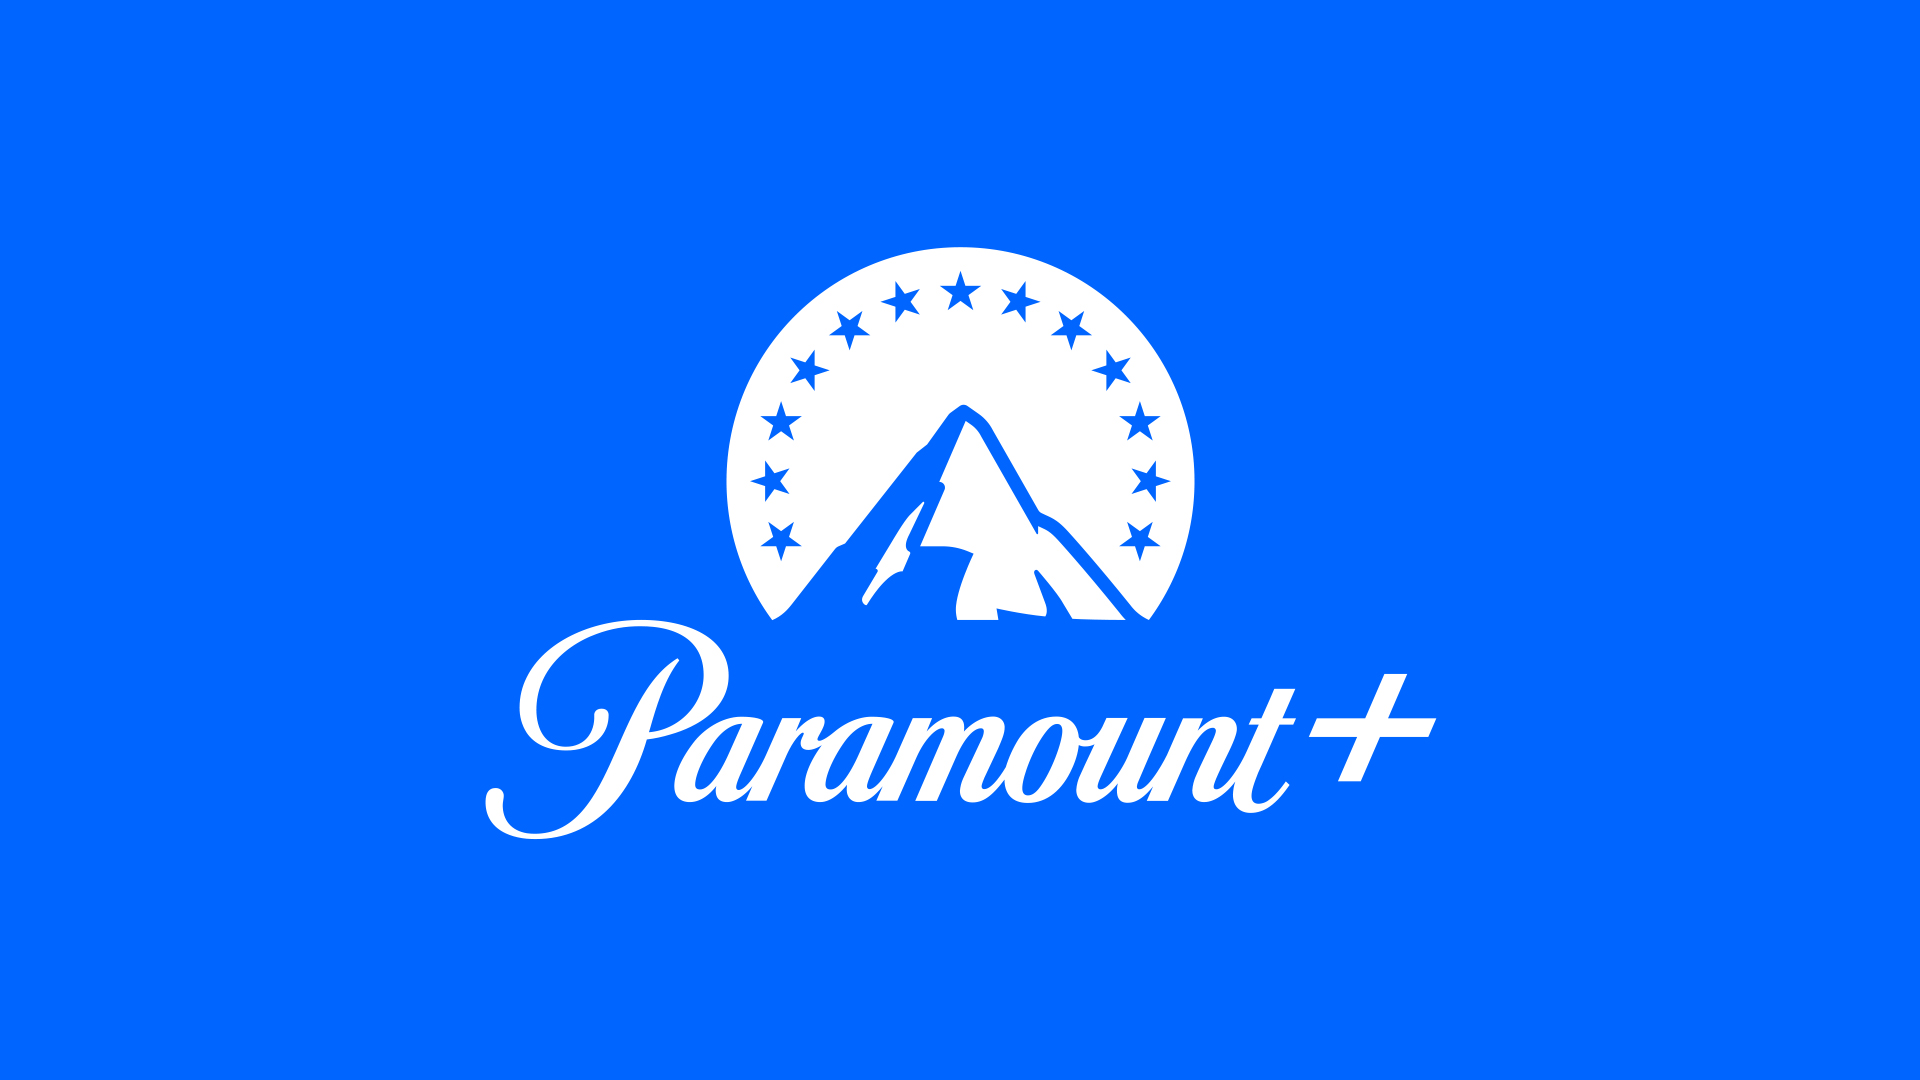 Paramount+. 